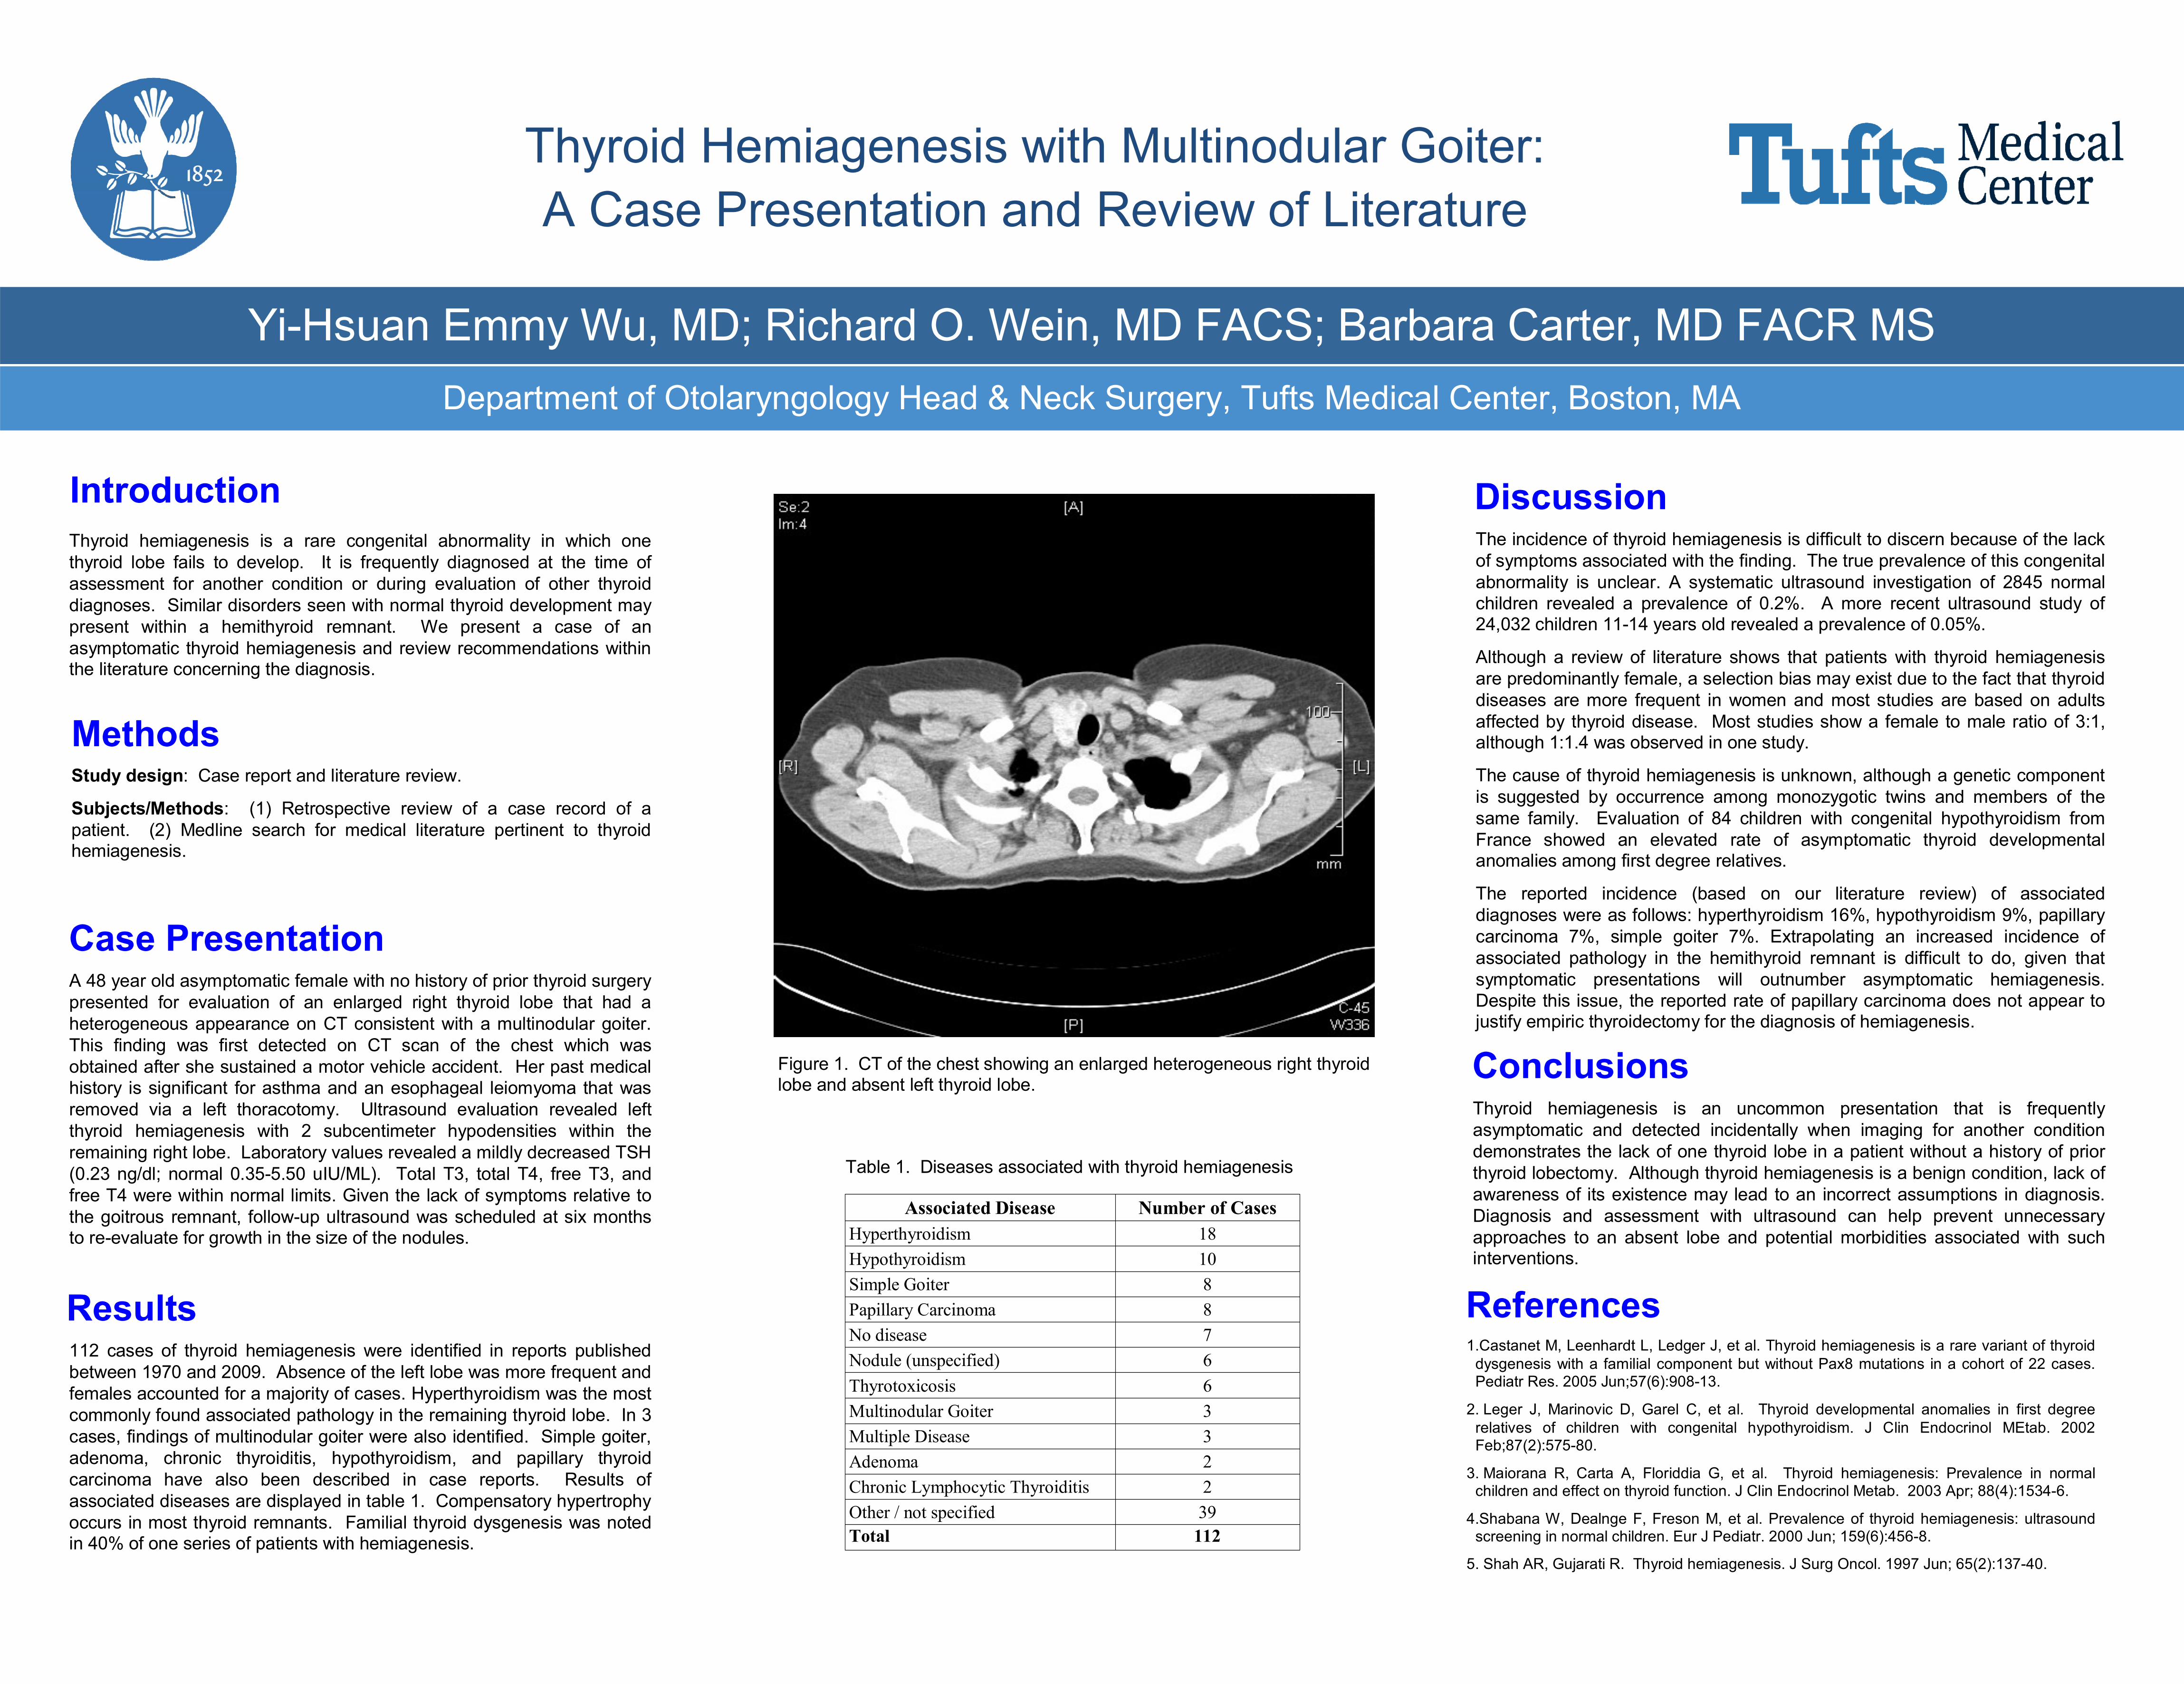 Thyroid Hemiagenesis With Multinodular Goiter A Case Presentation And